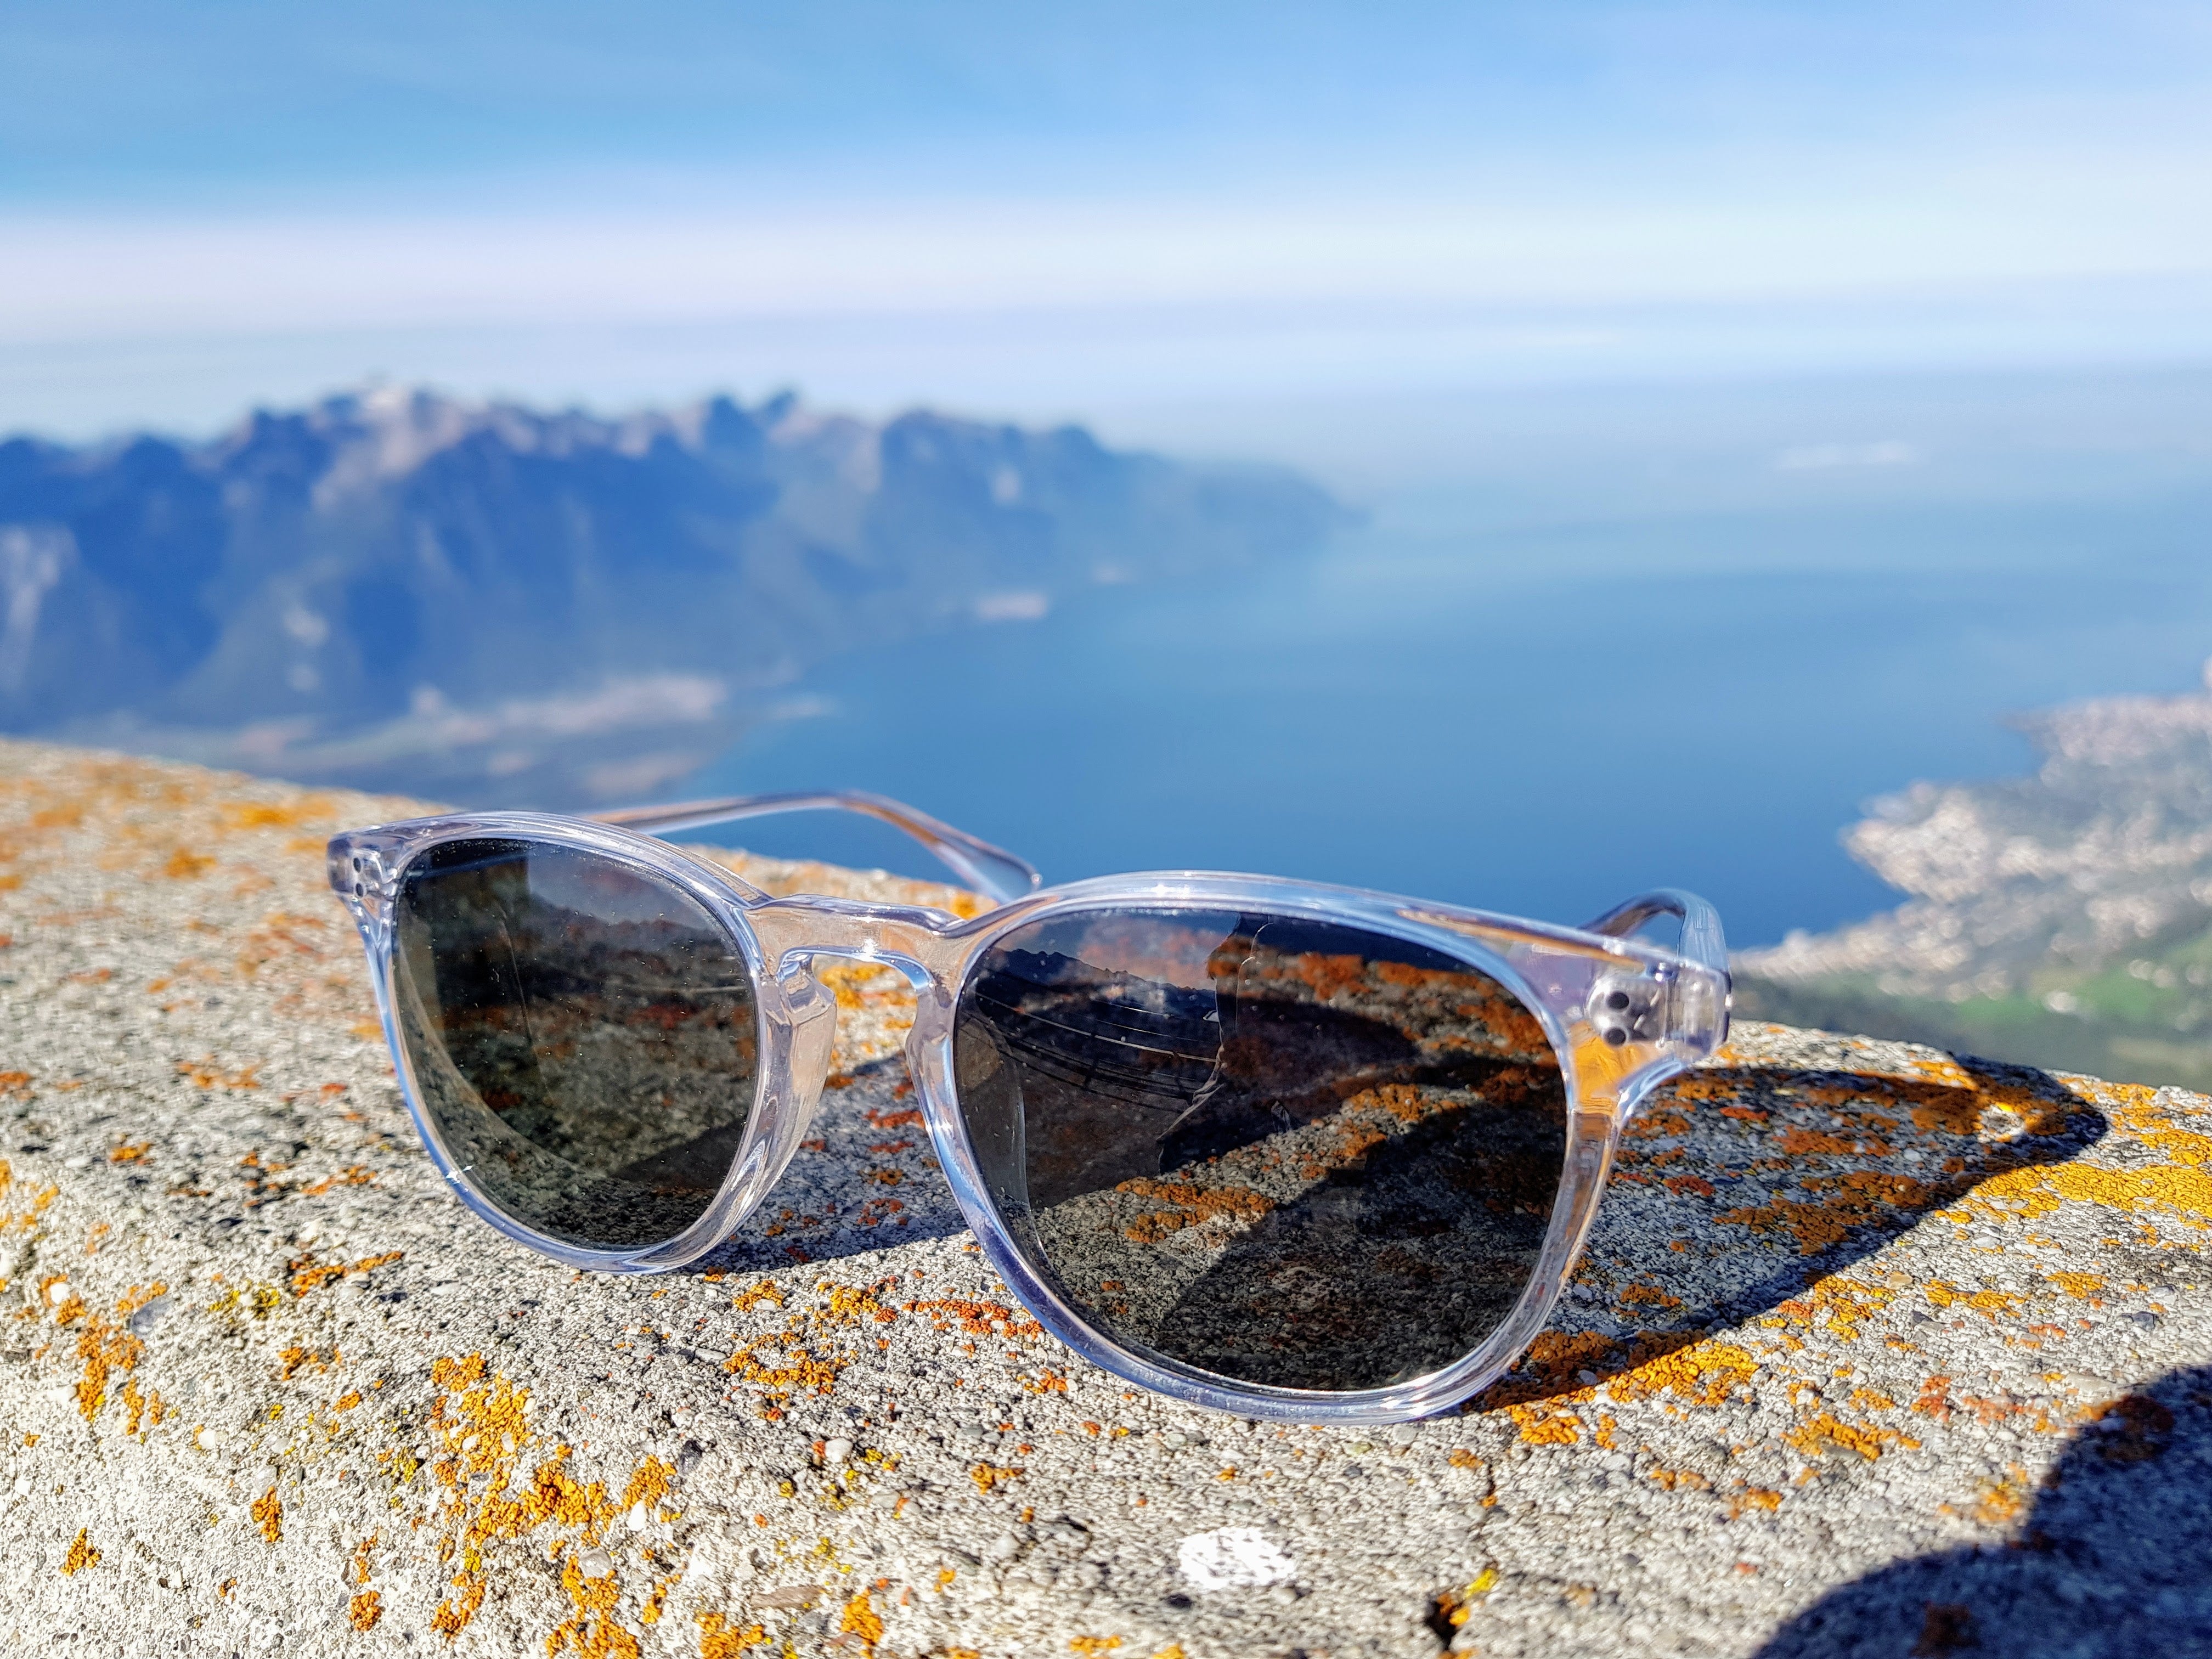 Rochers de Naye, overlooking Lake Geneva with @alexanderwiguna